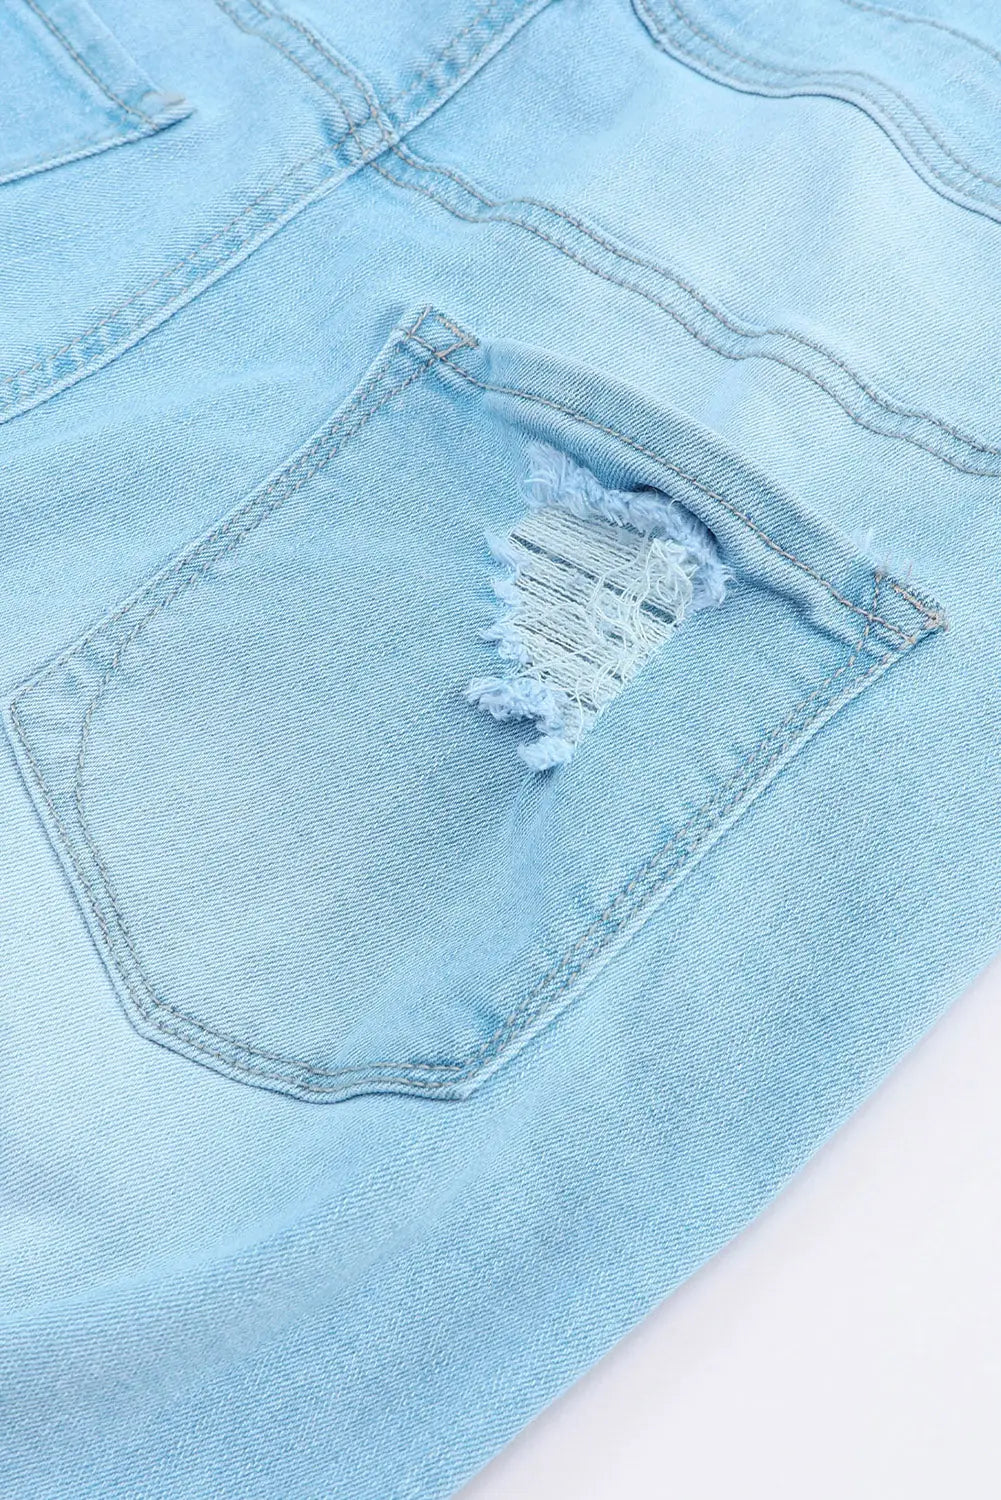 Sky blue constructed bib pocket distressed denim overalls - jumpsuits & rompers